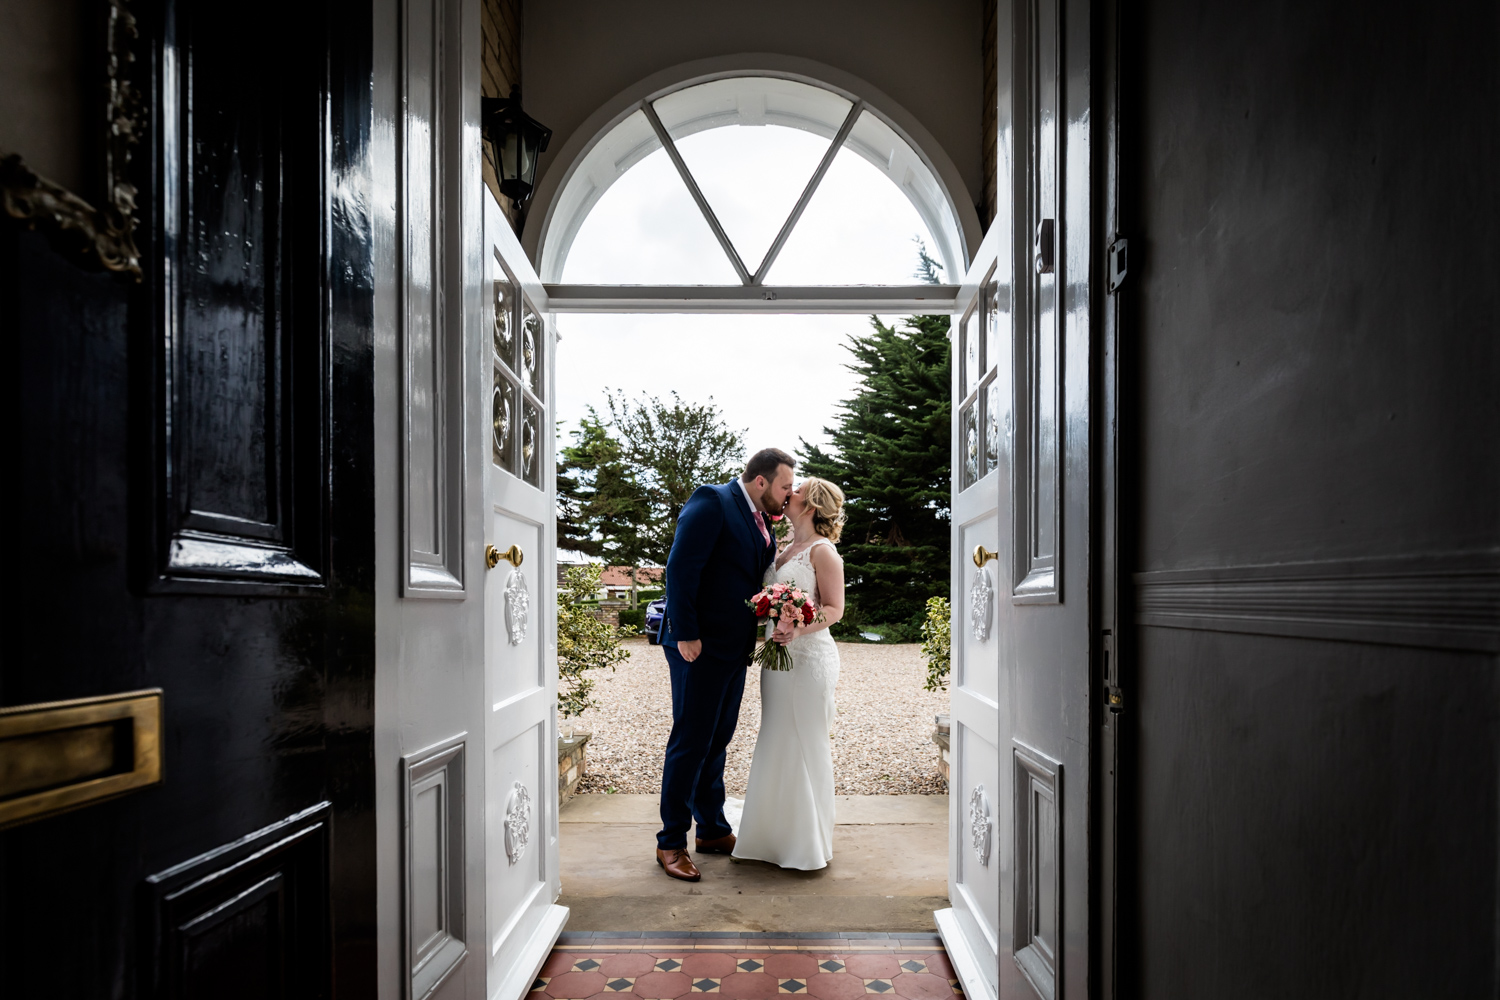 Dunedin House Wedding Photography - Couple portrait in the doorway